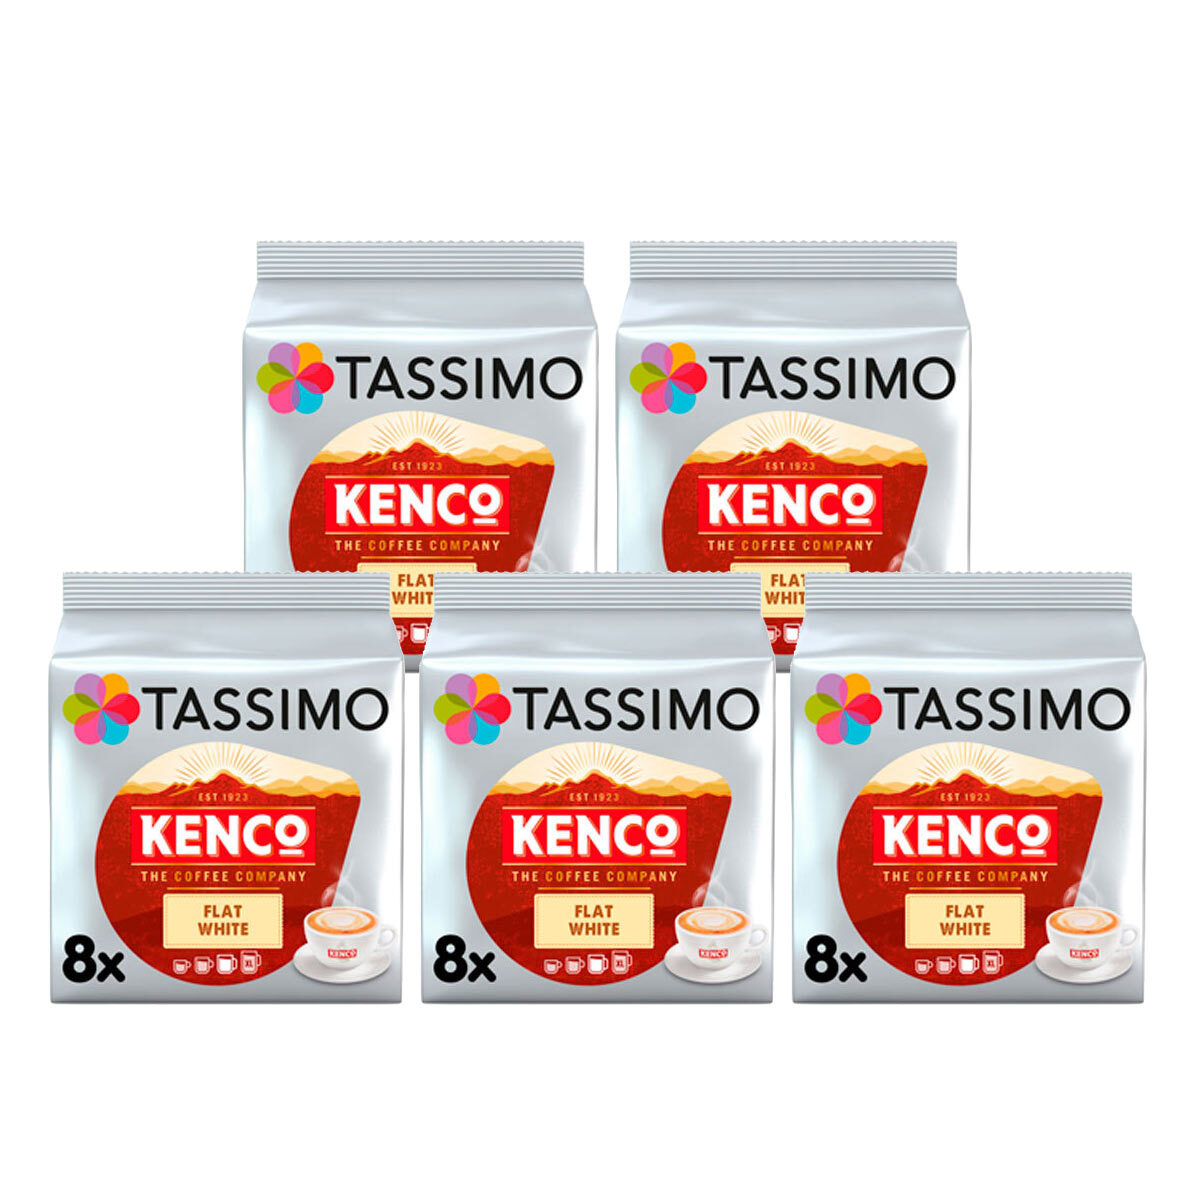 Tassimo Kenco Flat White Coffee Pods, 40 Servings